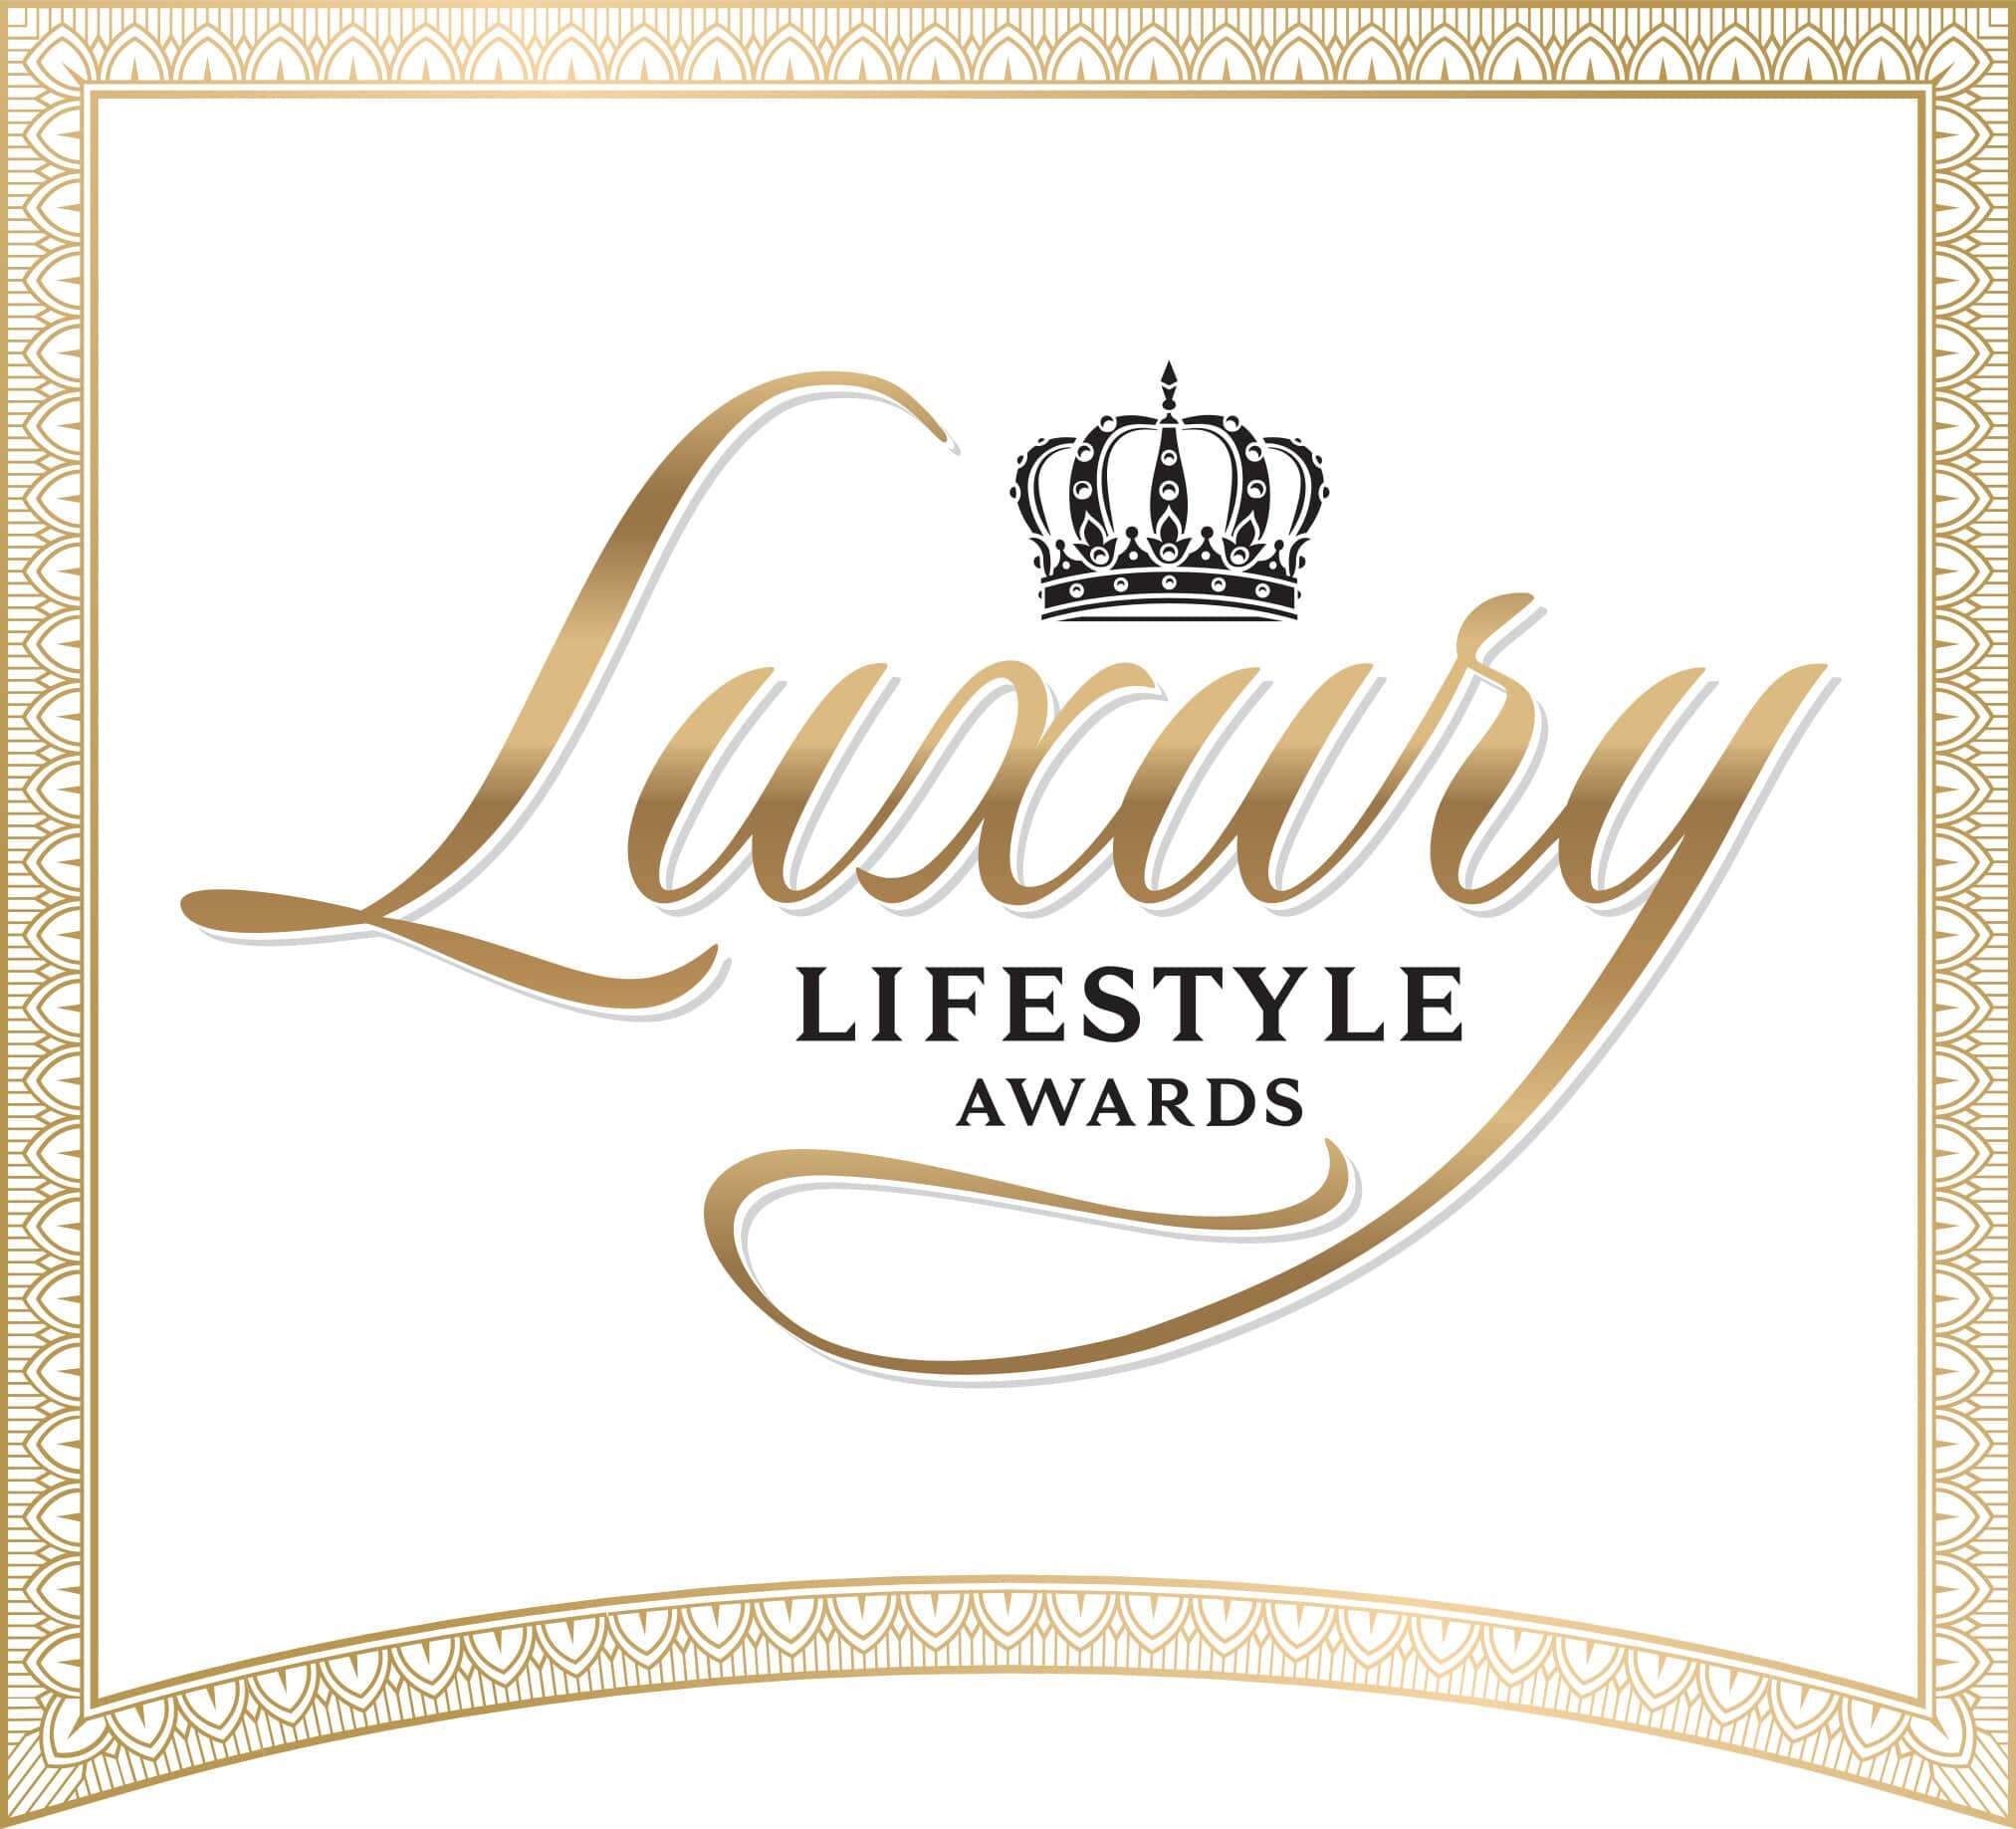 In partnership with Luxury Lifestyle Awards